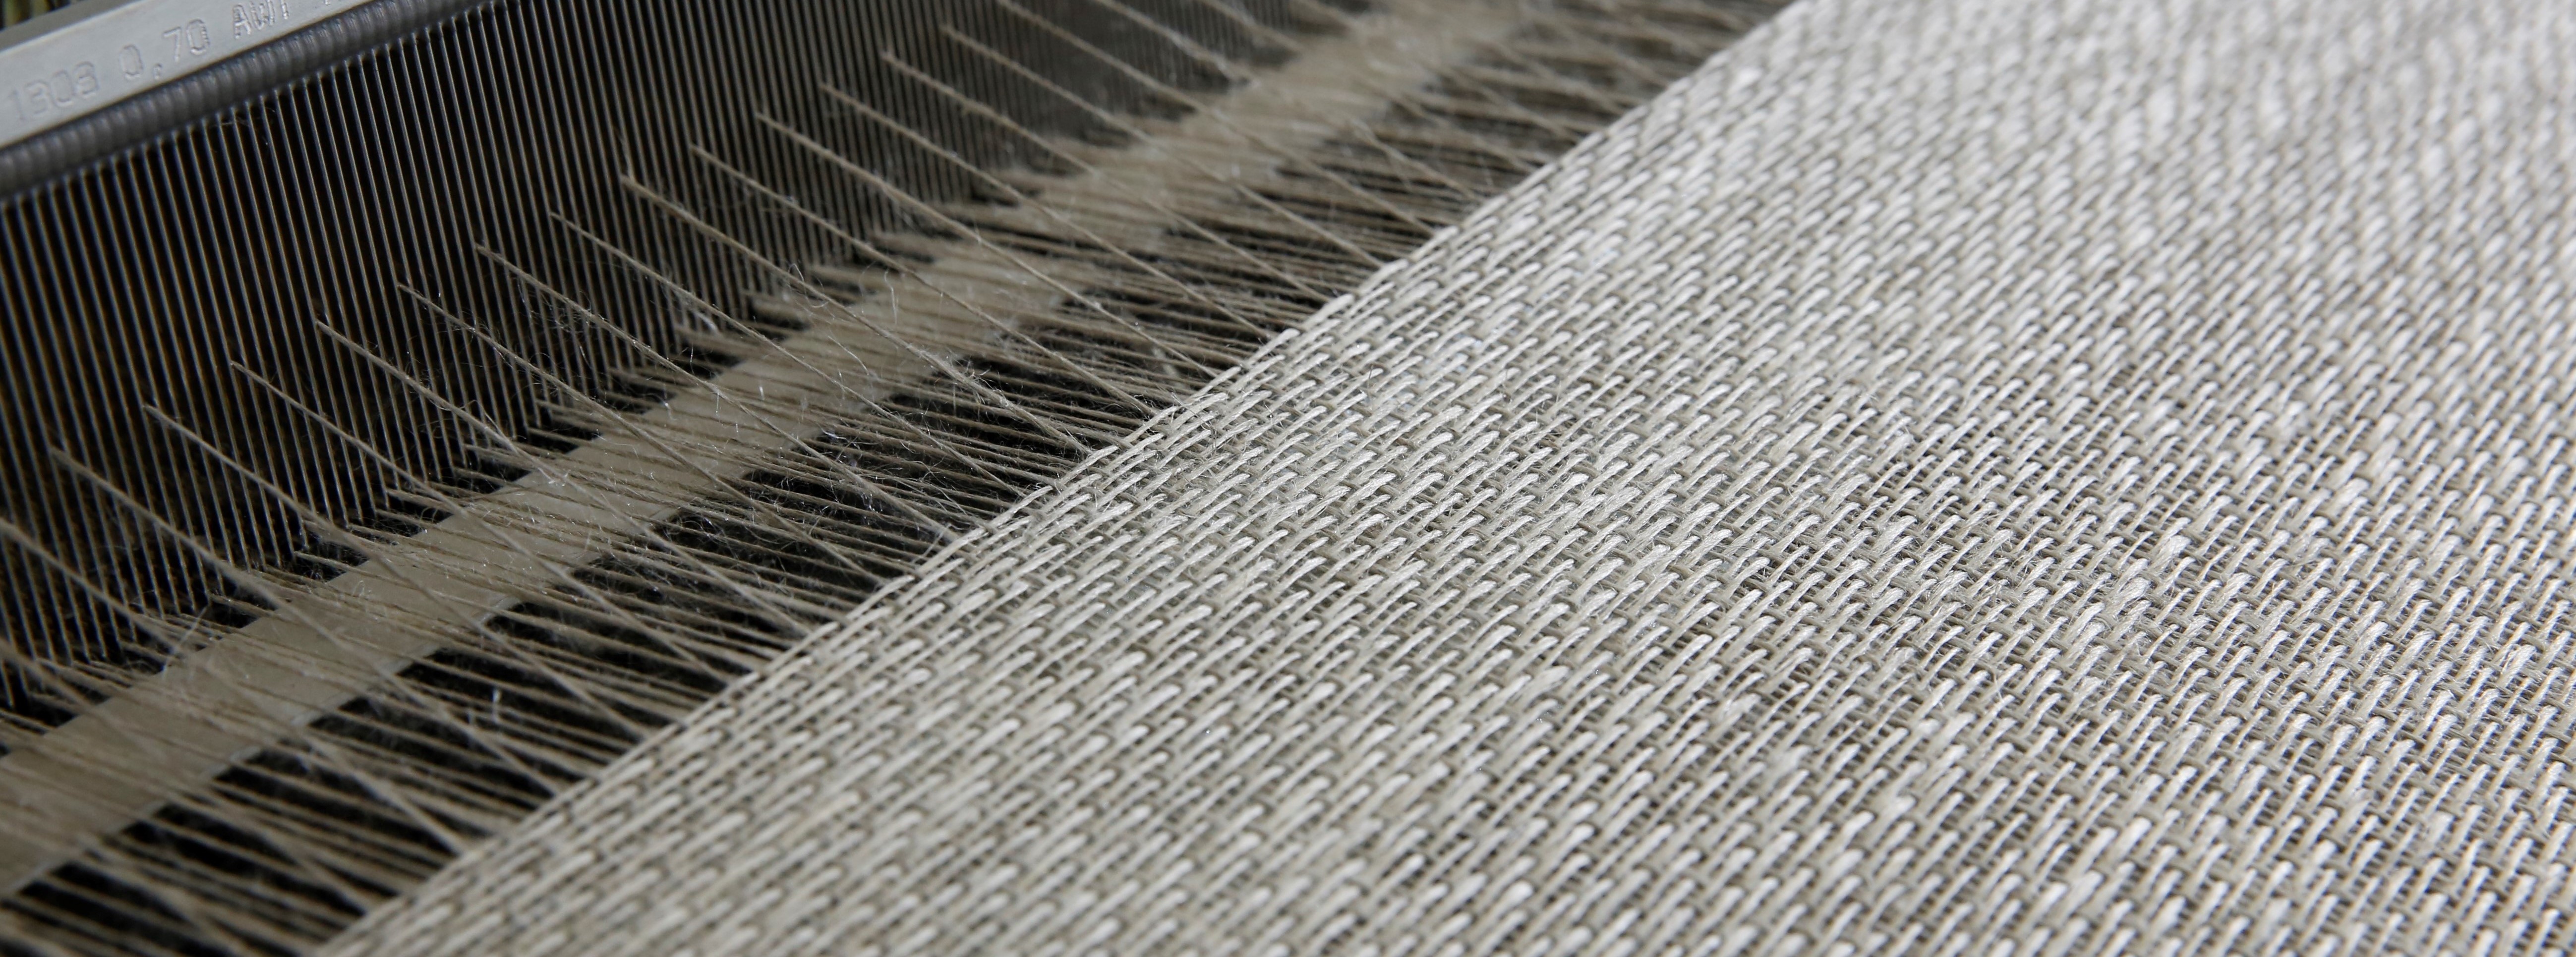 Textiles made of natural fibres